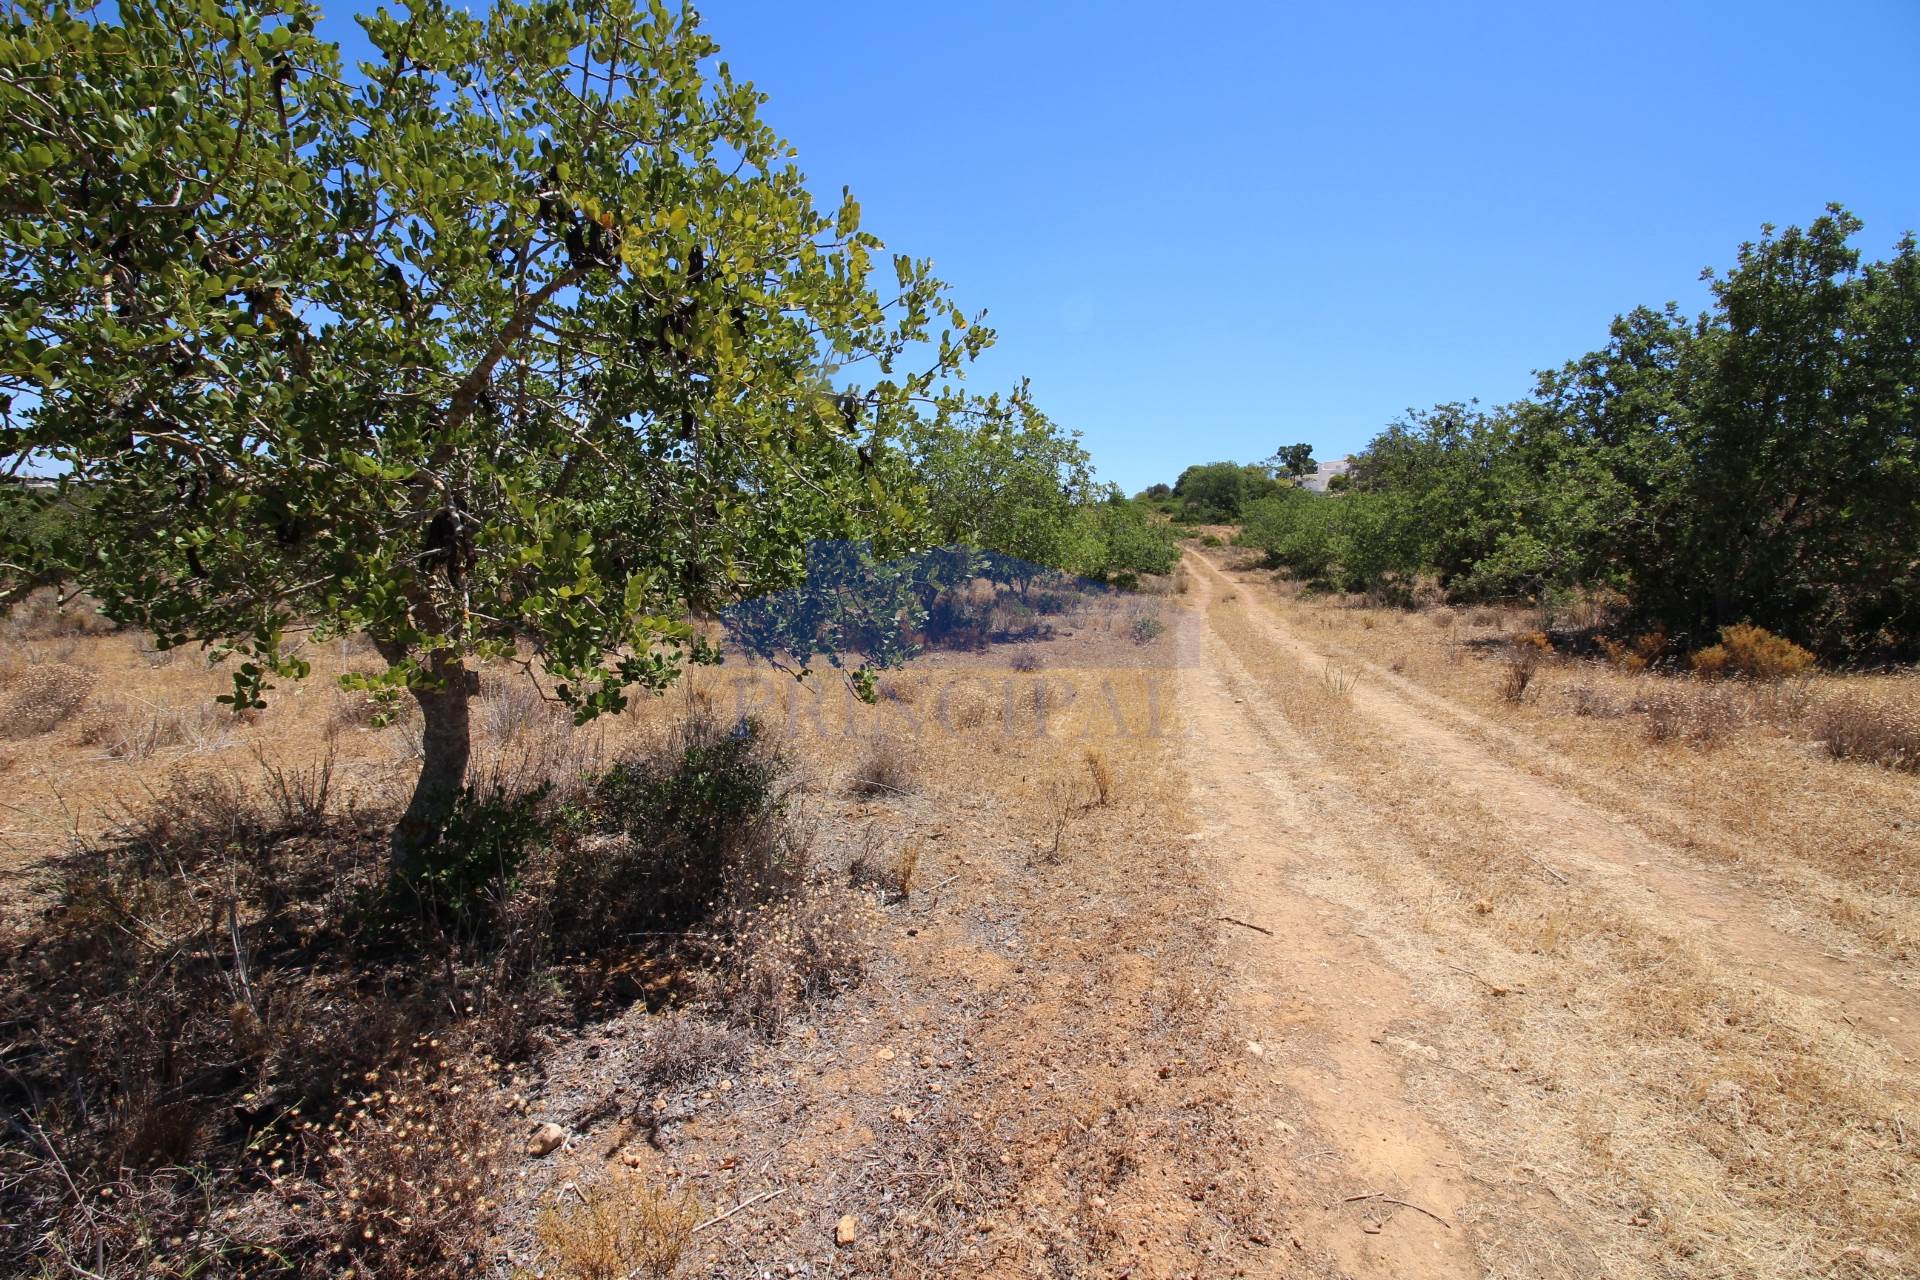 Rustic land with 2.2 hectares in urbanized area, Terras Novas